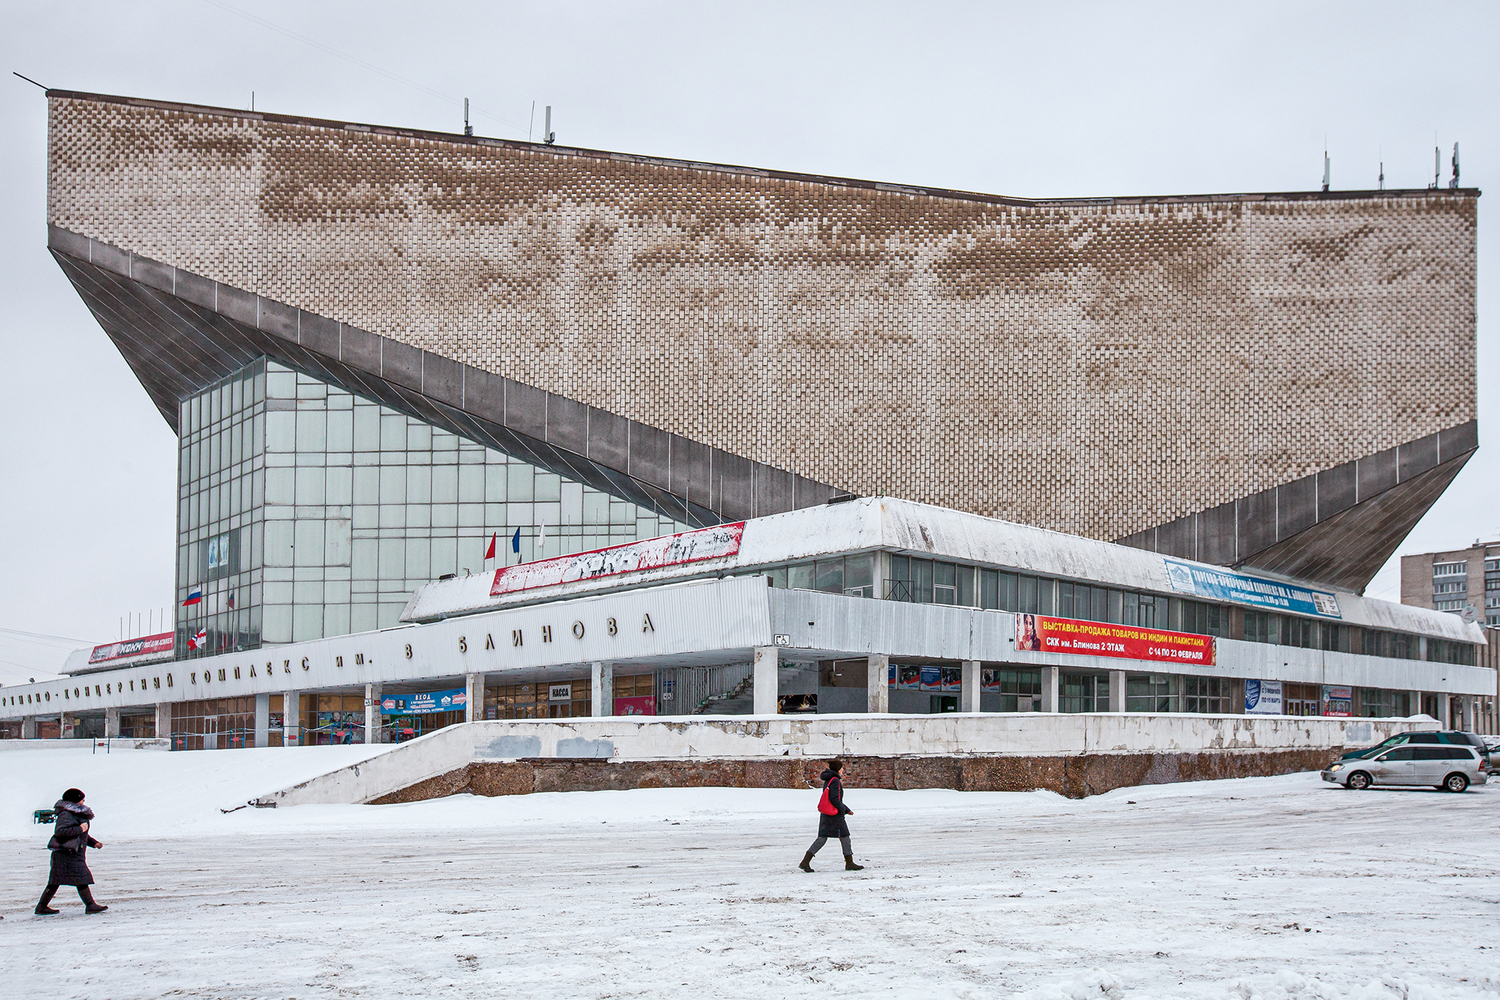 More information about "Μια σπάνια άποψη της σοβιετικής αρχιτεκτονικής στη Σιβηρία"